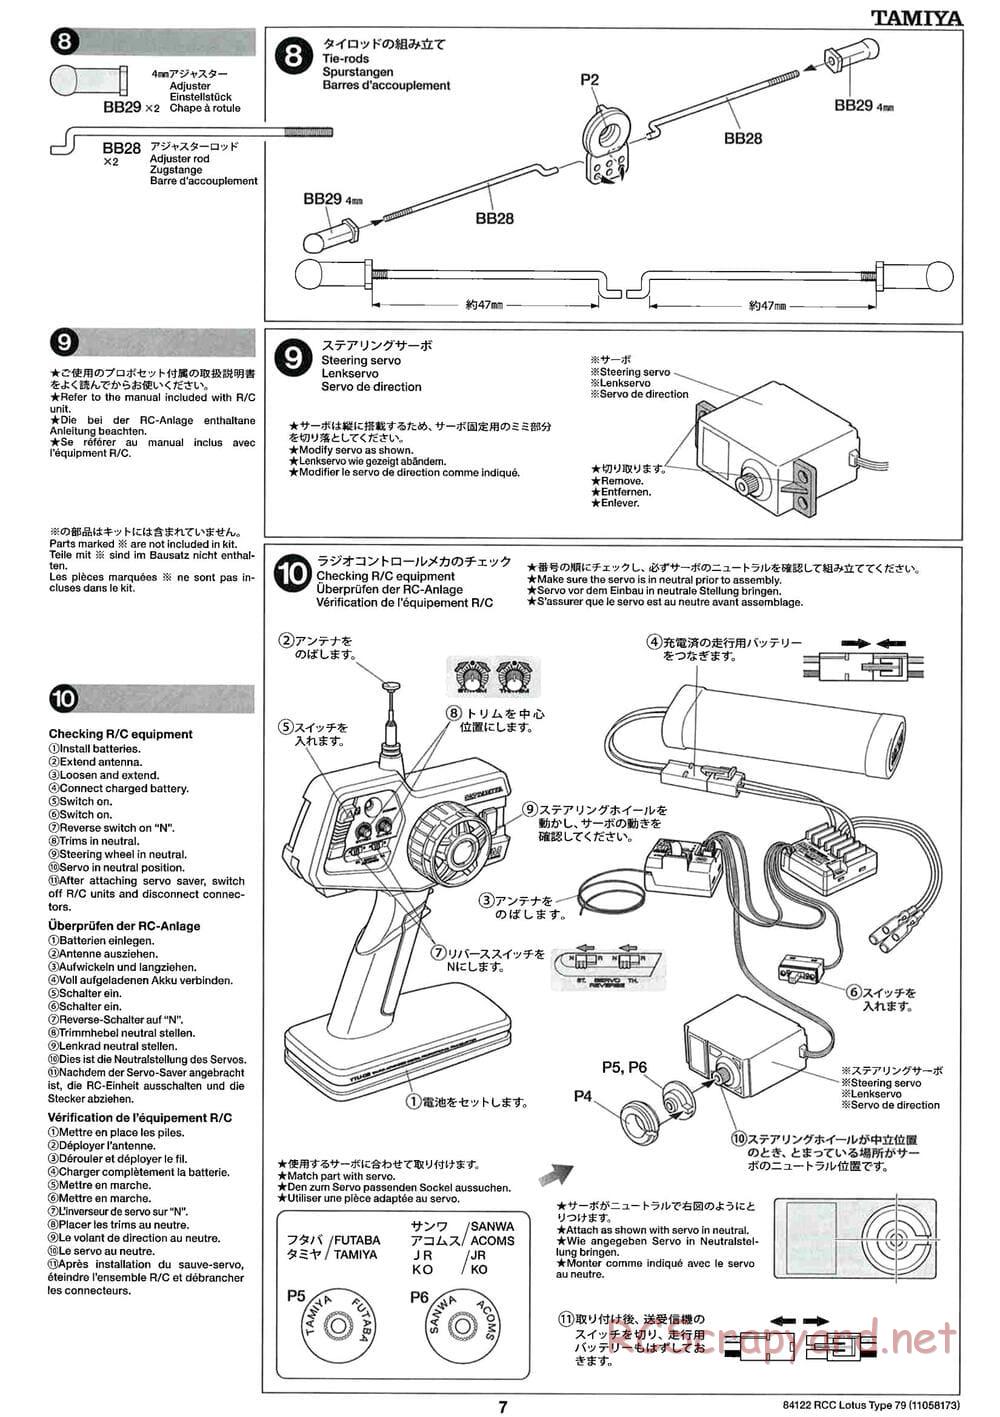 Tamiya - Lotus Type 79 - F104W Chassis - Manual - Page 7